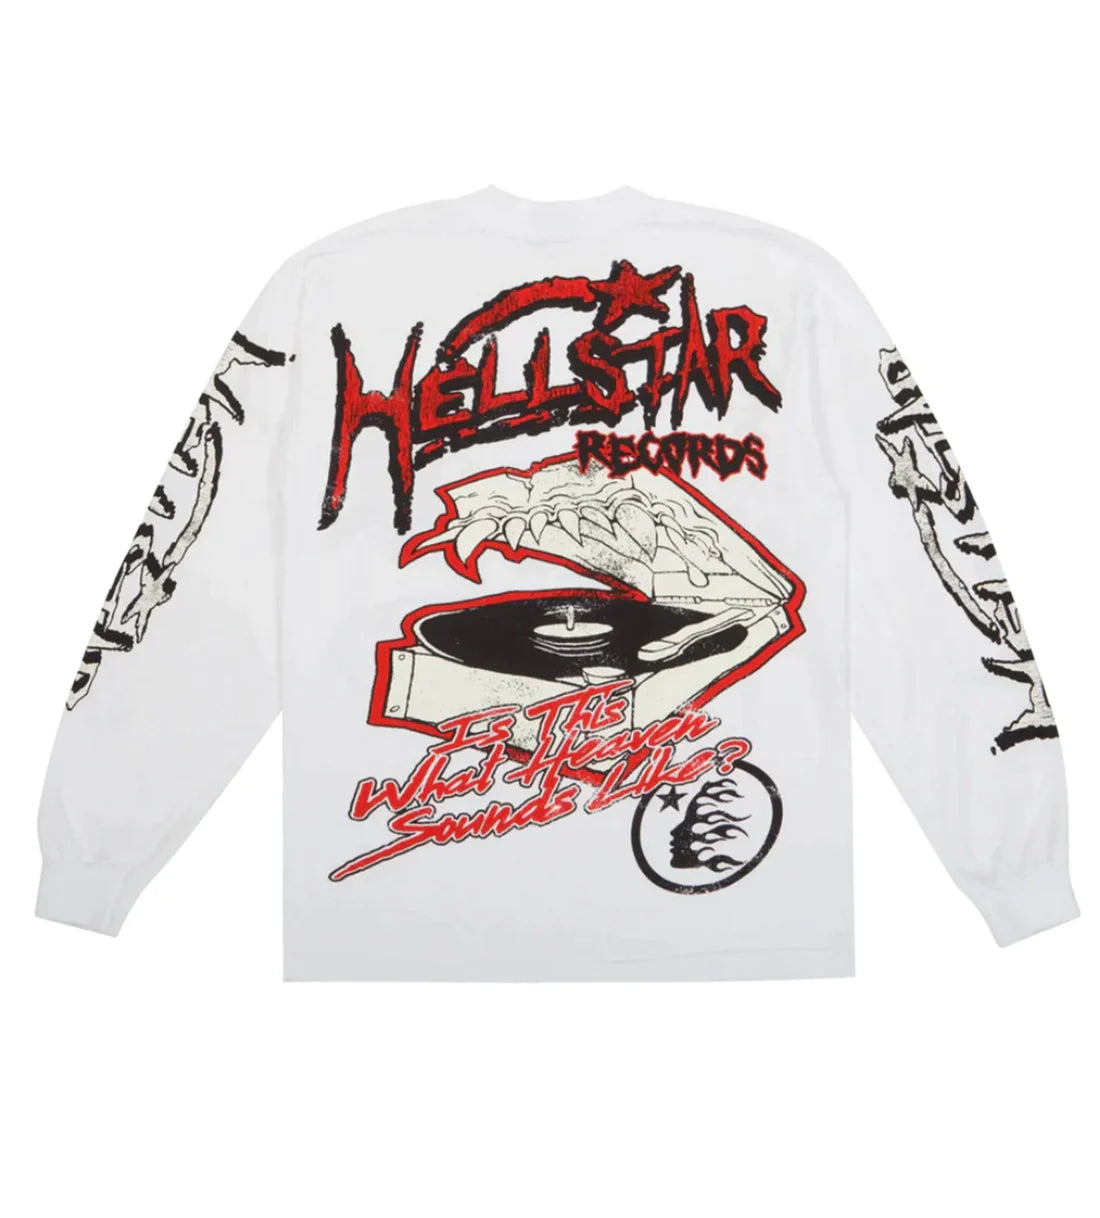 Hellstar Studios "Hellstar Records" L/S Tee White (Capsule 9)